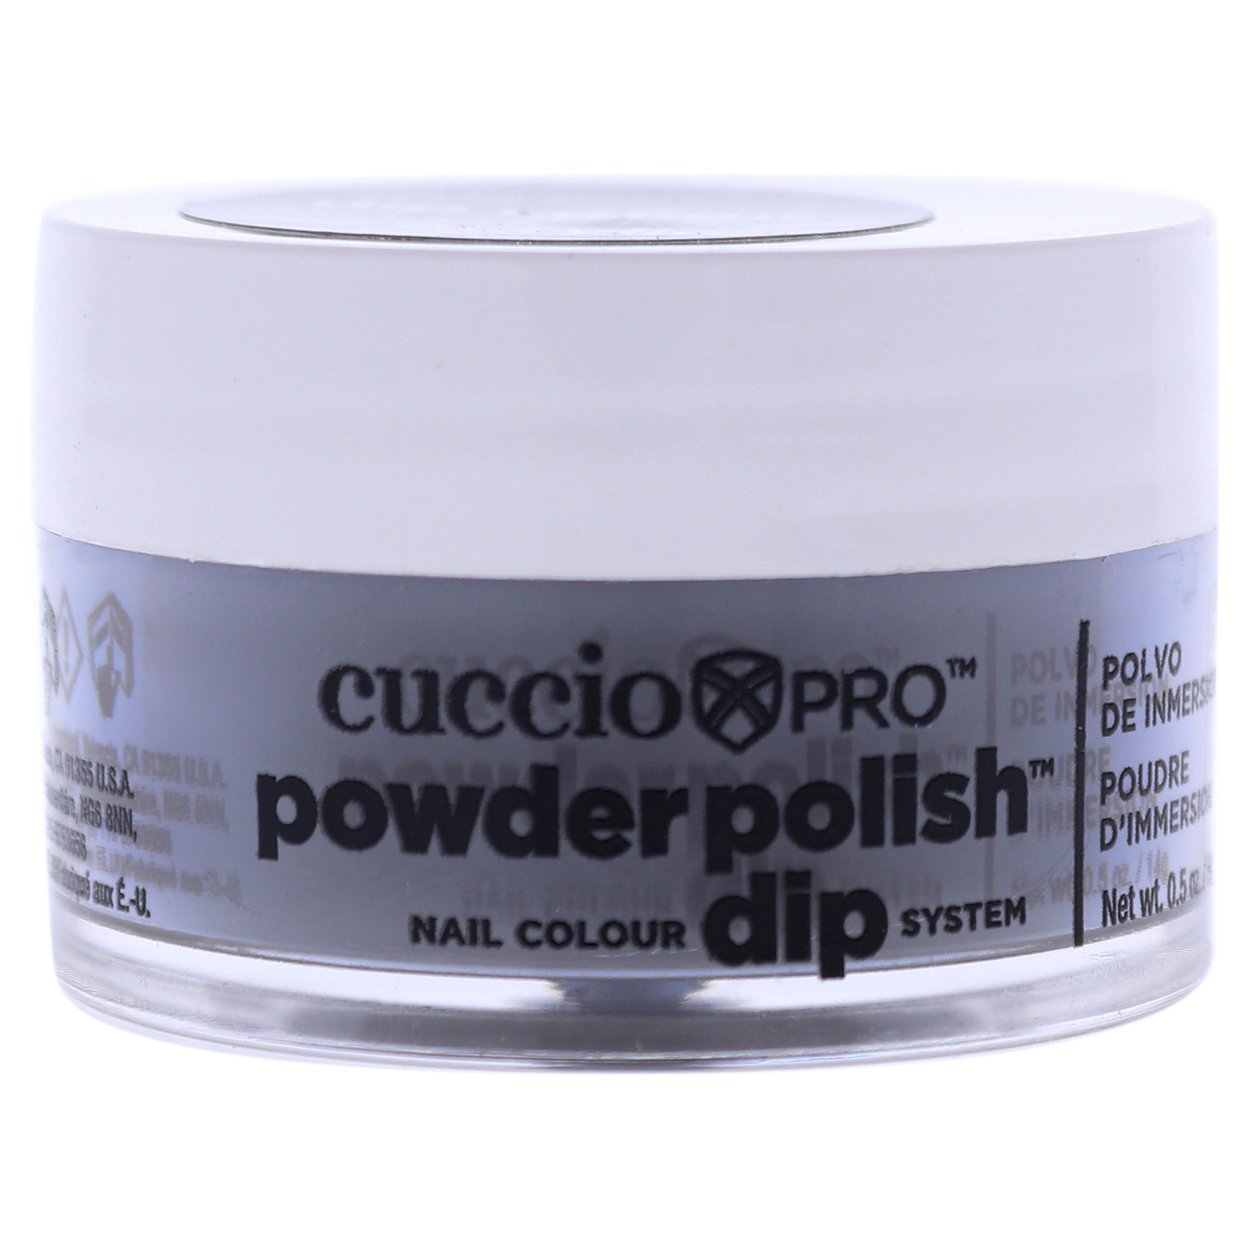 Cuccio Colour Pro Powder Polish Nail Colour Dip System - Noir Black Nail Powder 0.5 Oz